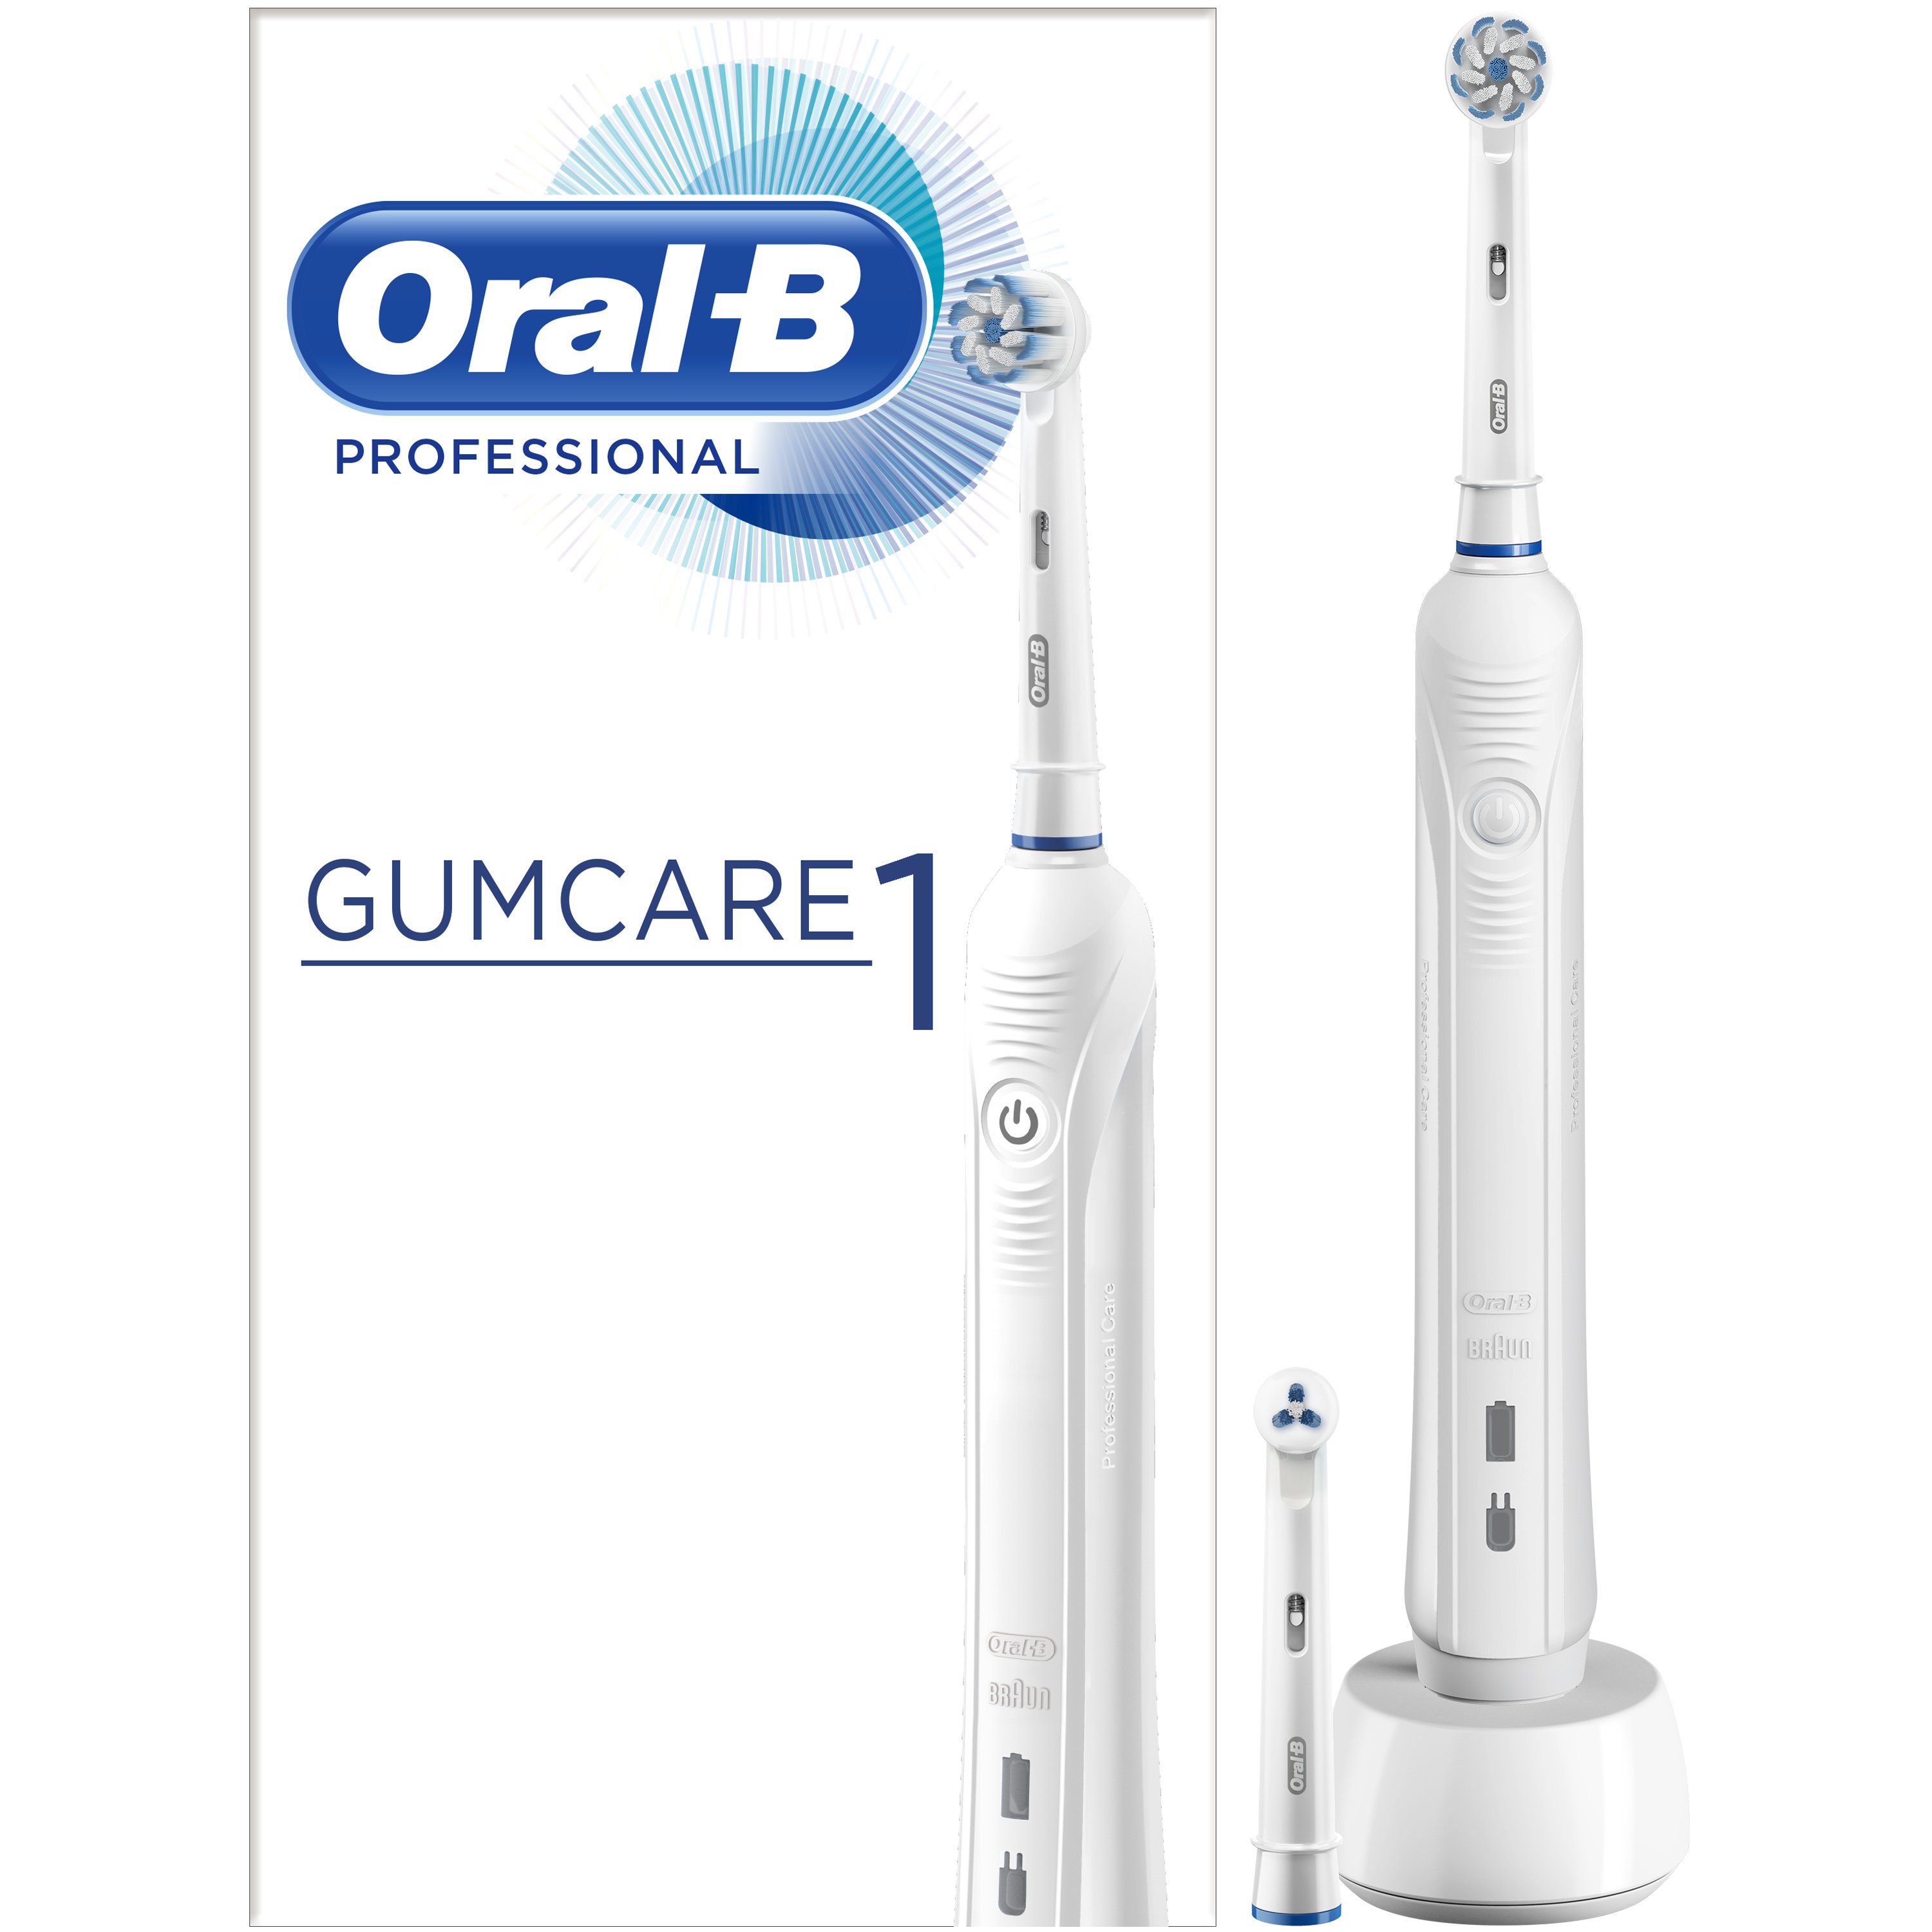 Oral-B Professional GumCare 1 Ηλεκτρική Οδοντόβουρτσα για Απαλό Καθαρισμό & Προστασία των Ούλων 1 Τεμάχιο 28924